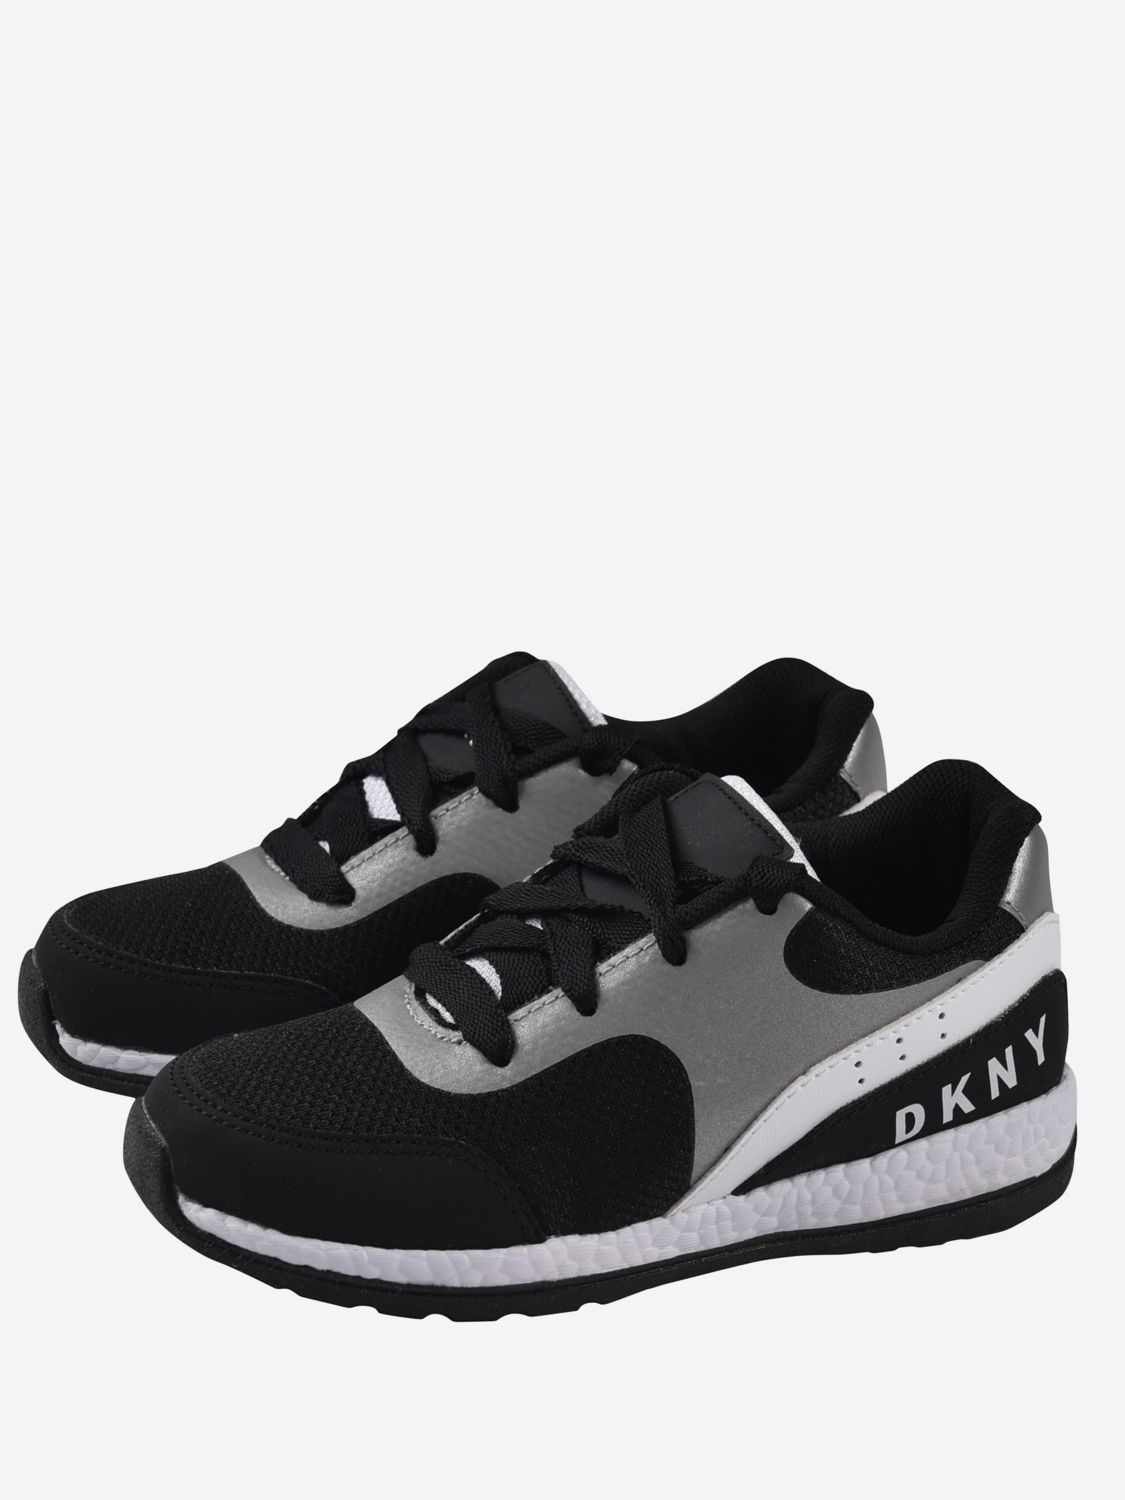 dkny black tennis shoes